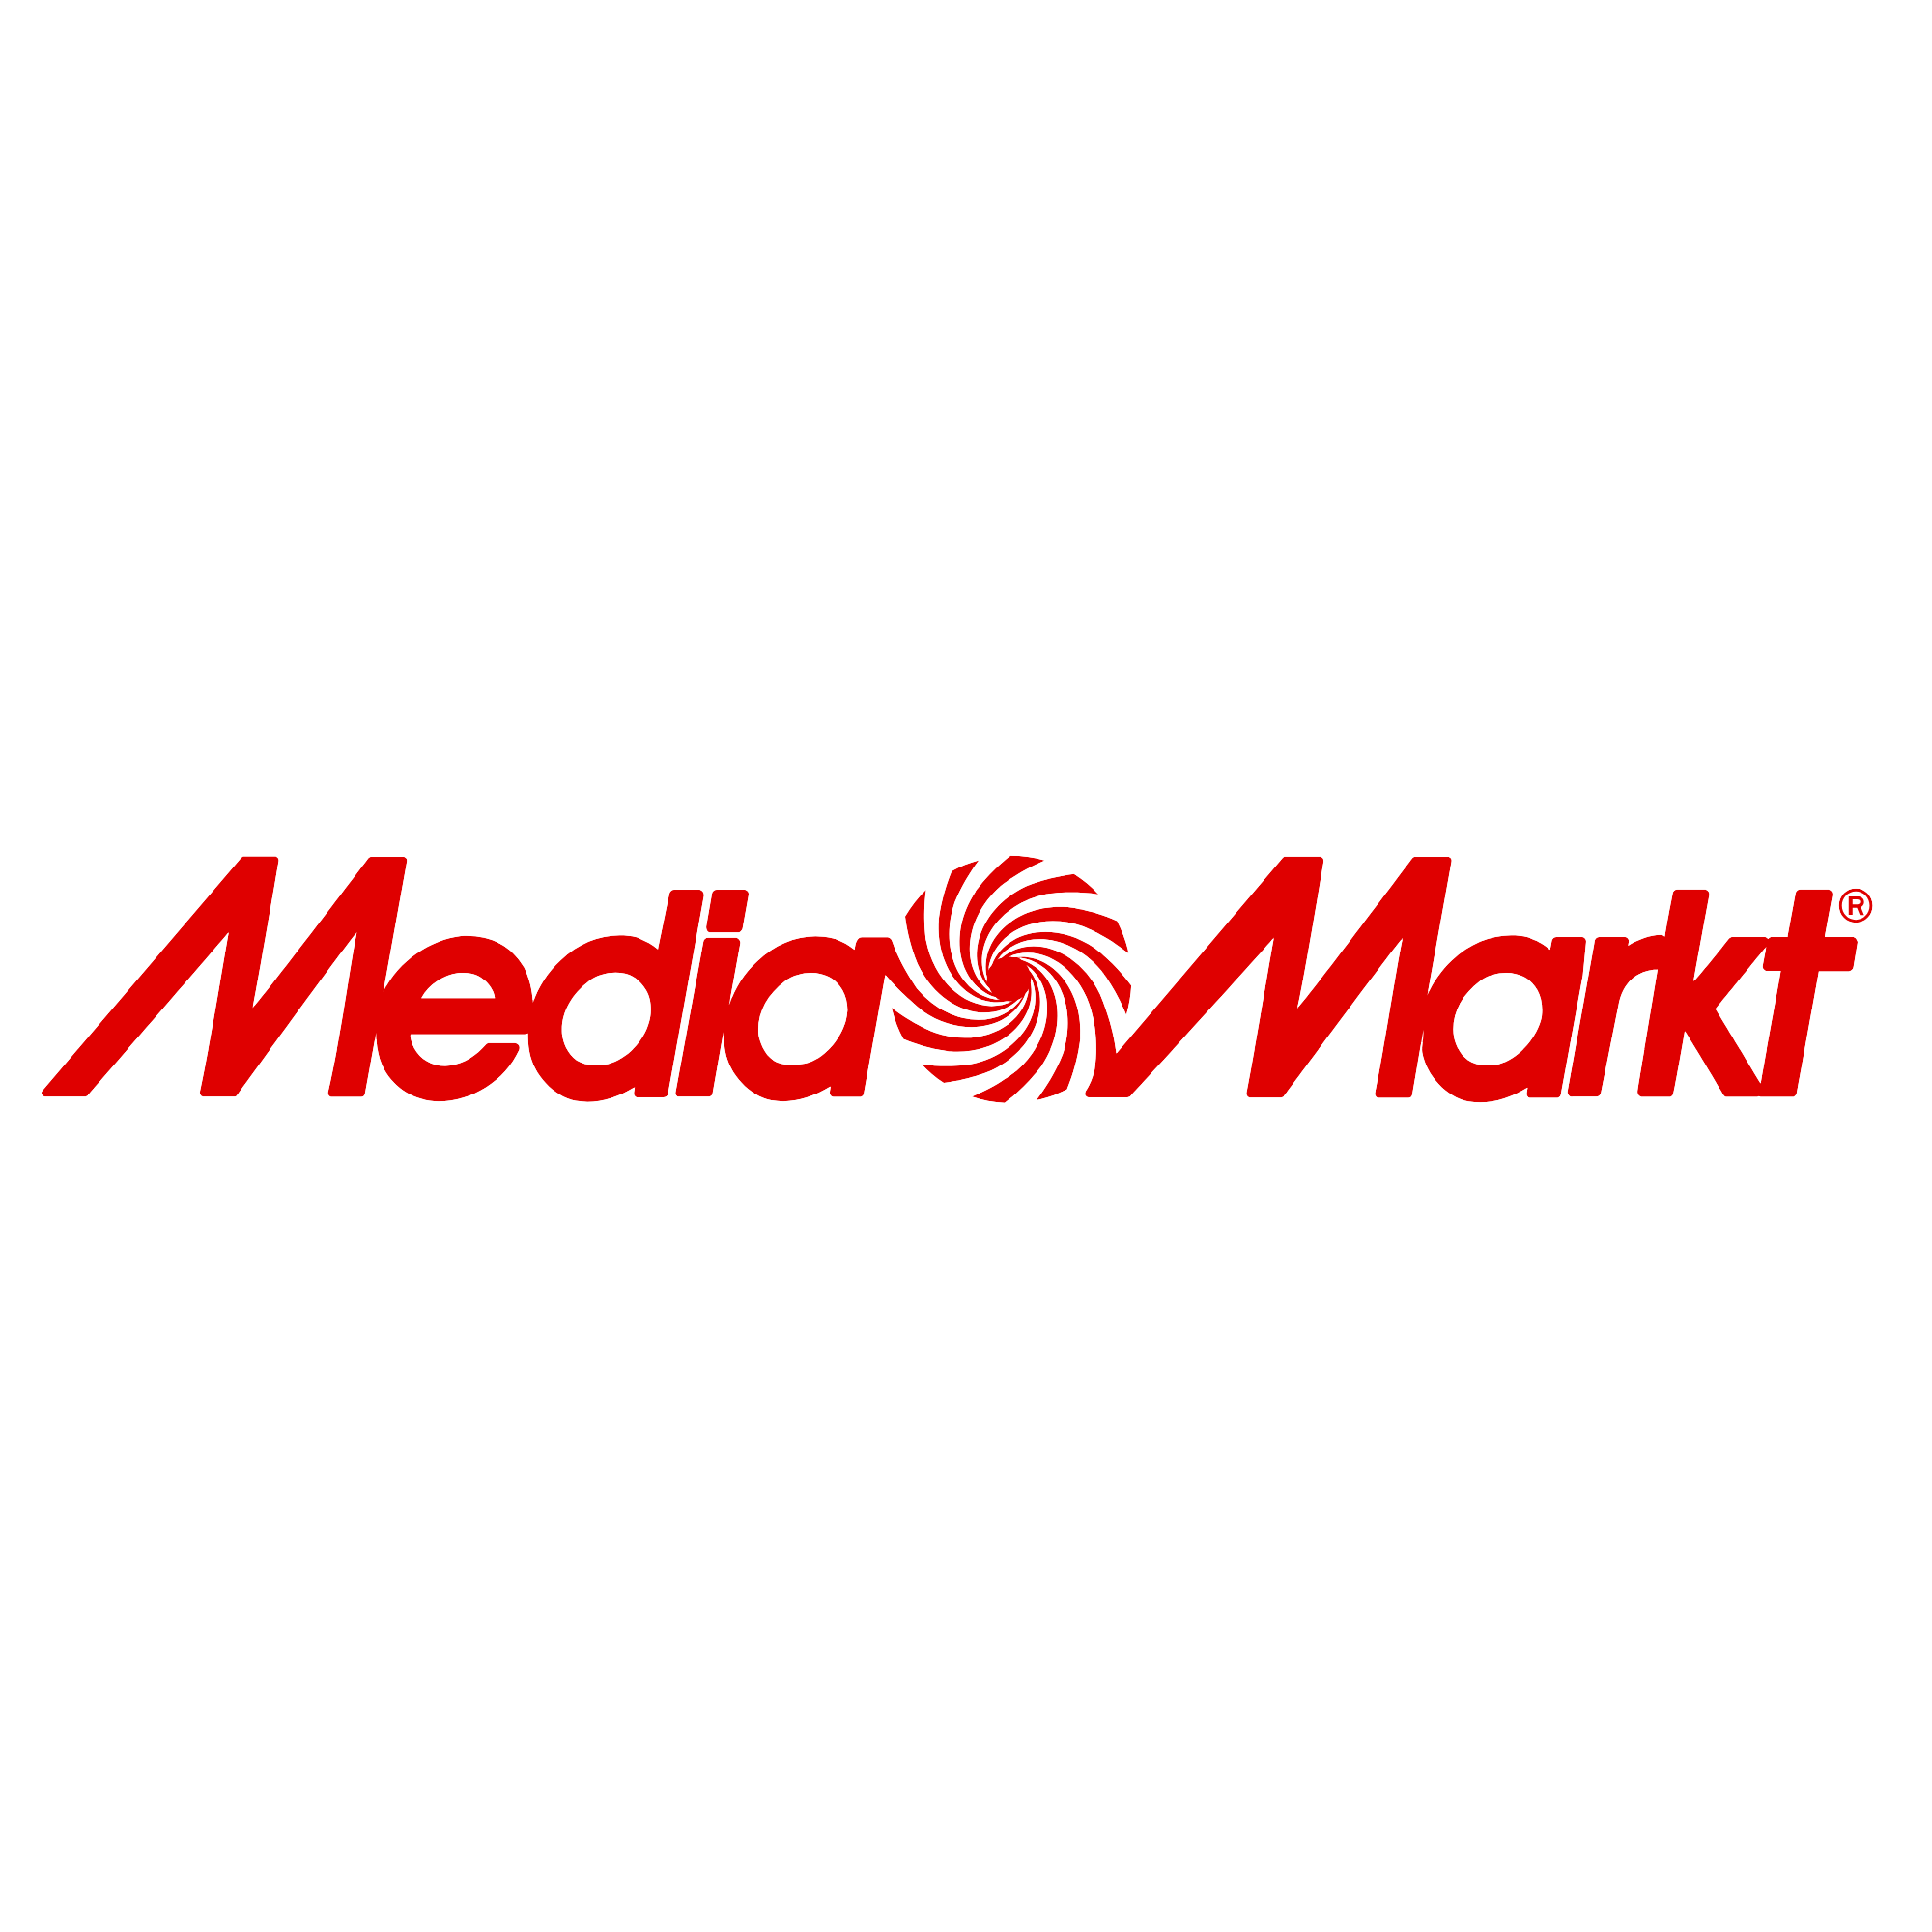 MediaMarkt Days al mejor precio MediaMarkt